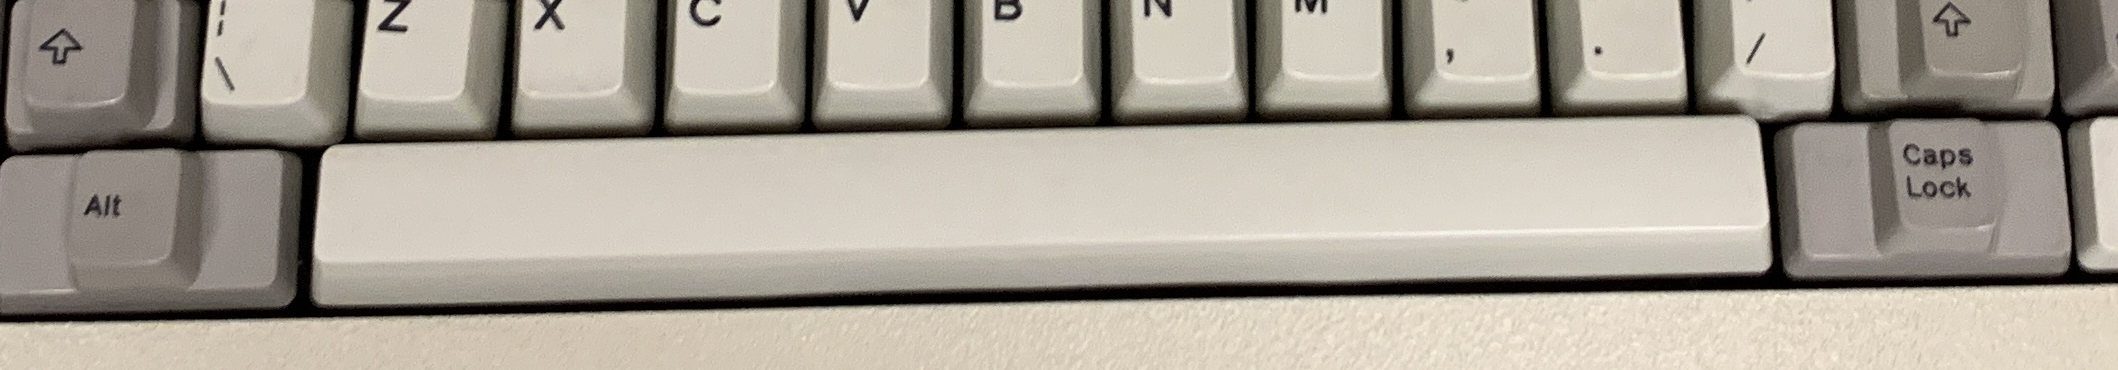 bottom of keyboard, highlighting spacebar